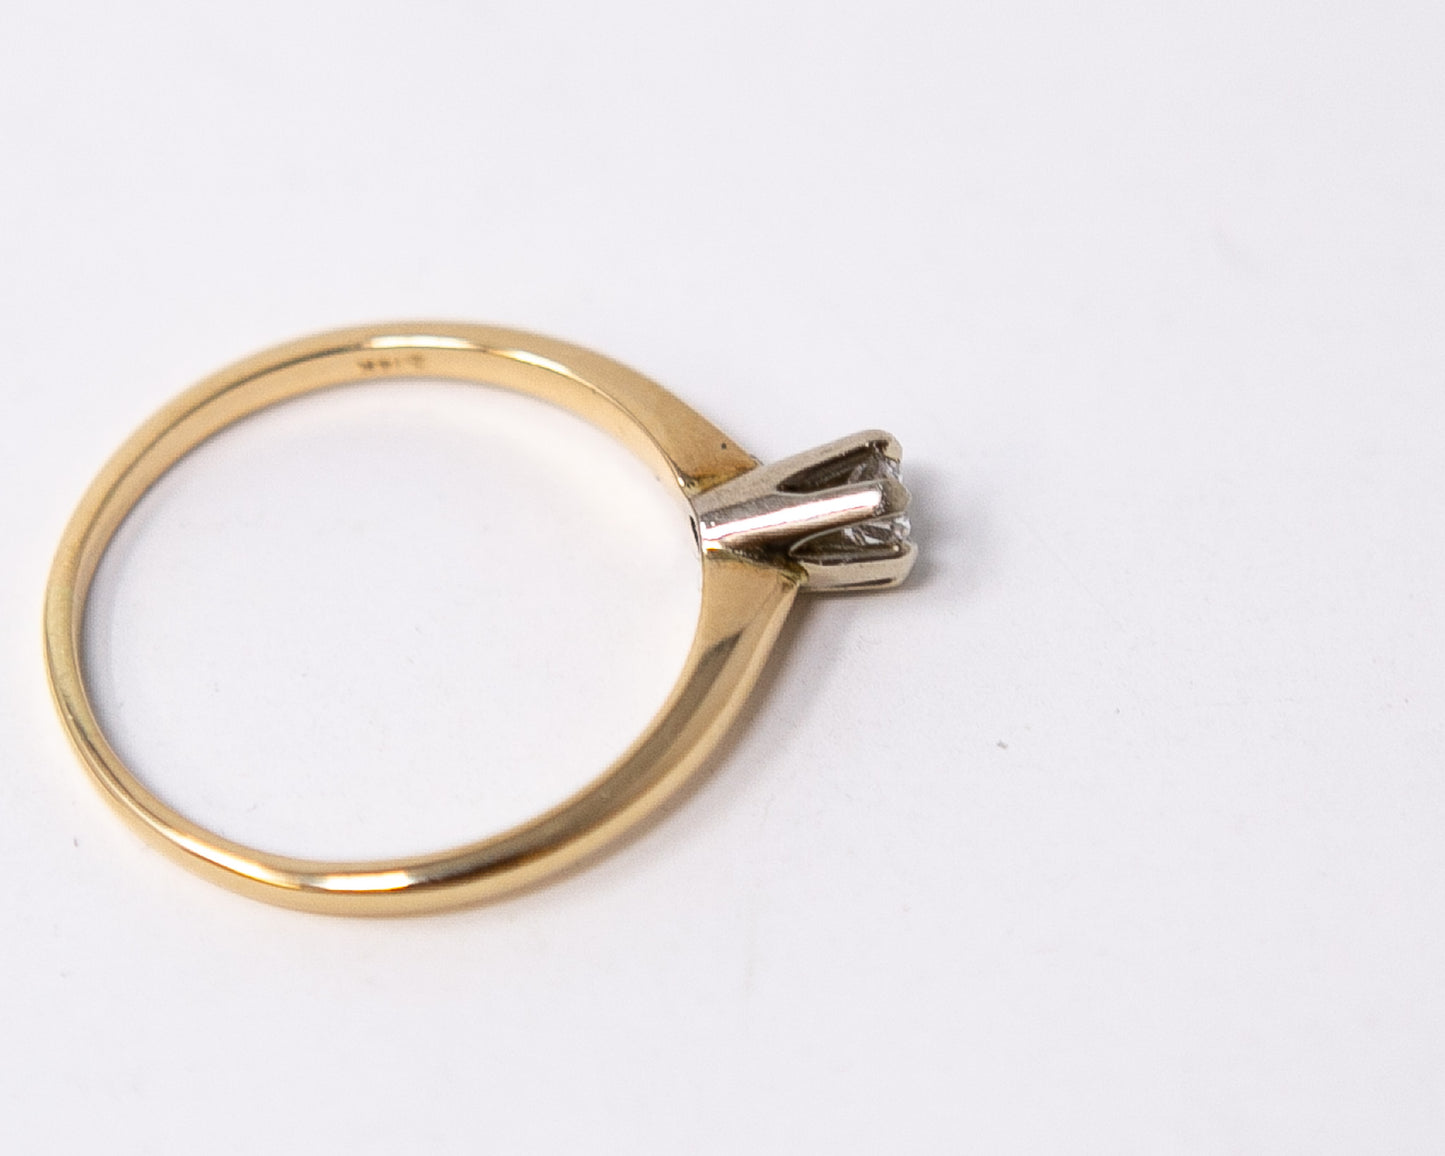 Estate Diamond Engagement Ring